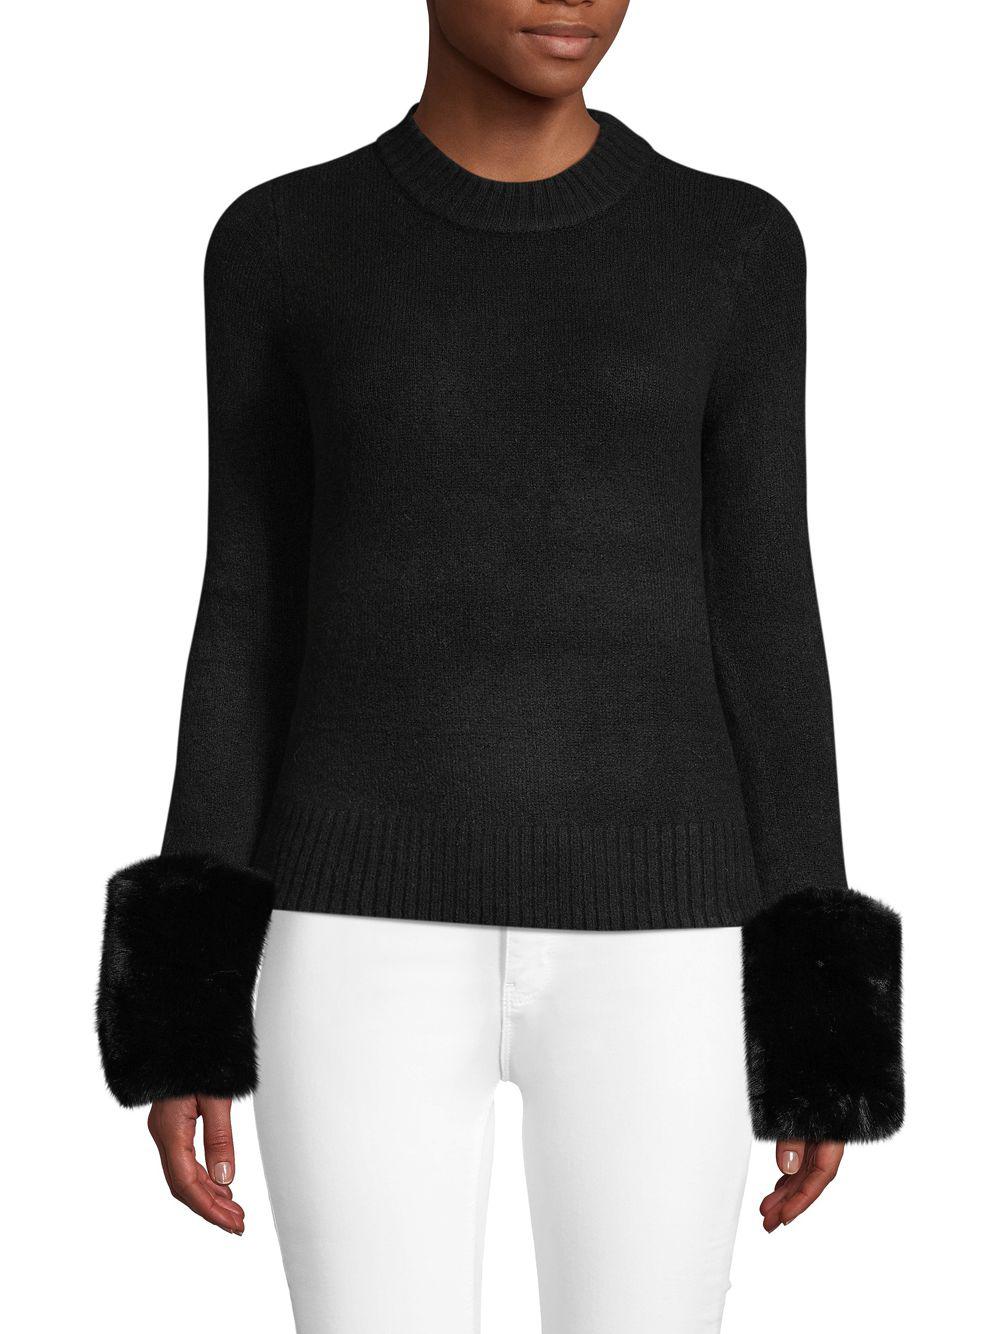 Saks Fifth Avenue Faux Fur Cuff Crew Sweater in Black